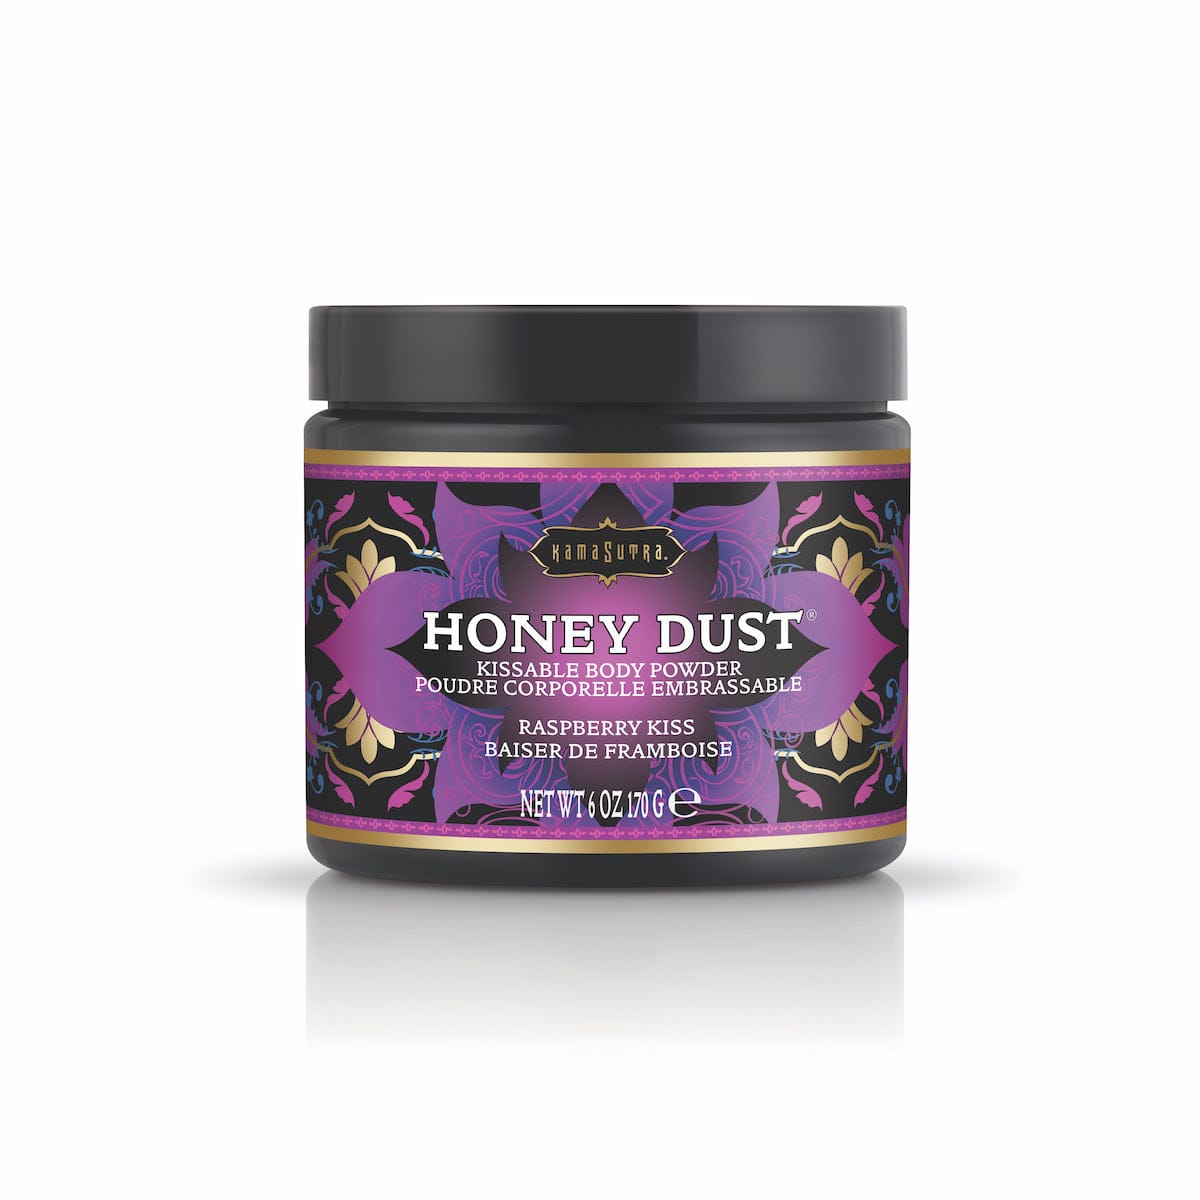 Honey Dust Kissable Body Powders by Kama Sutra - rolik